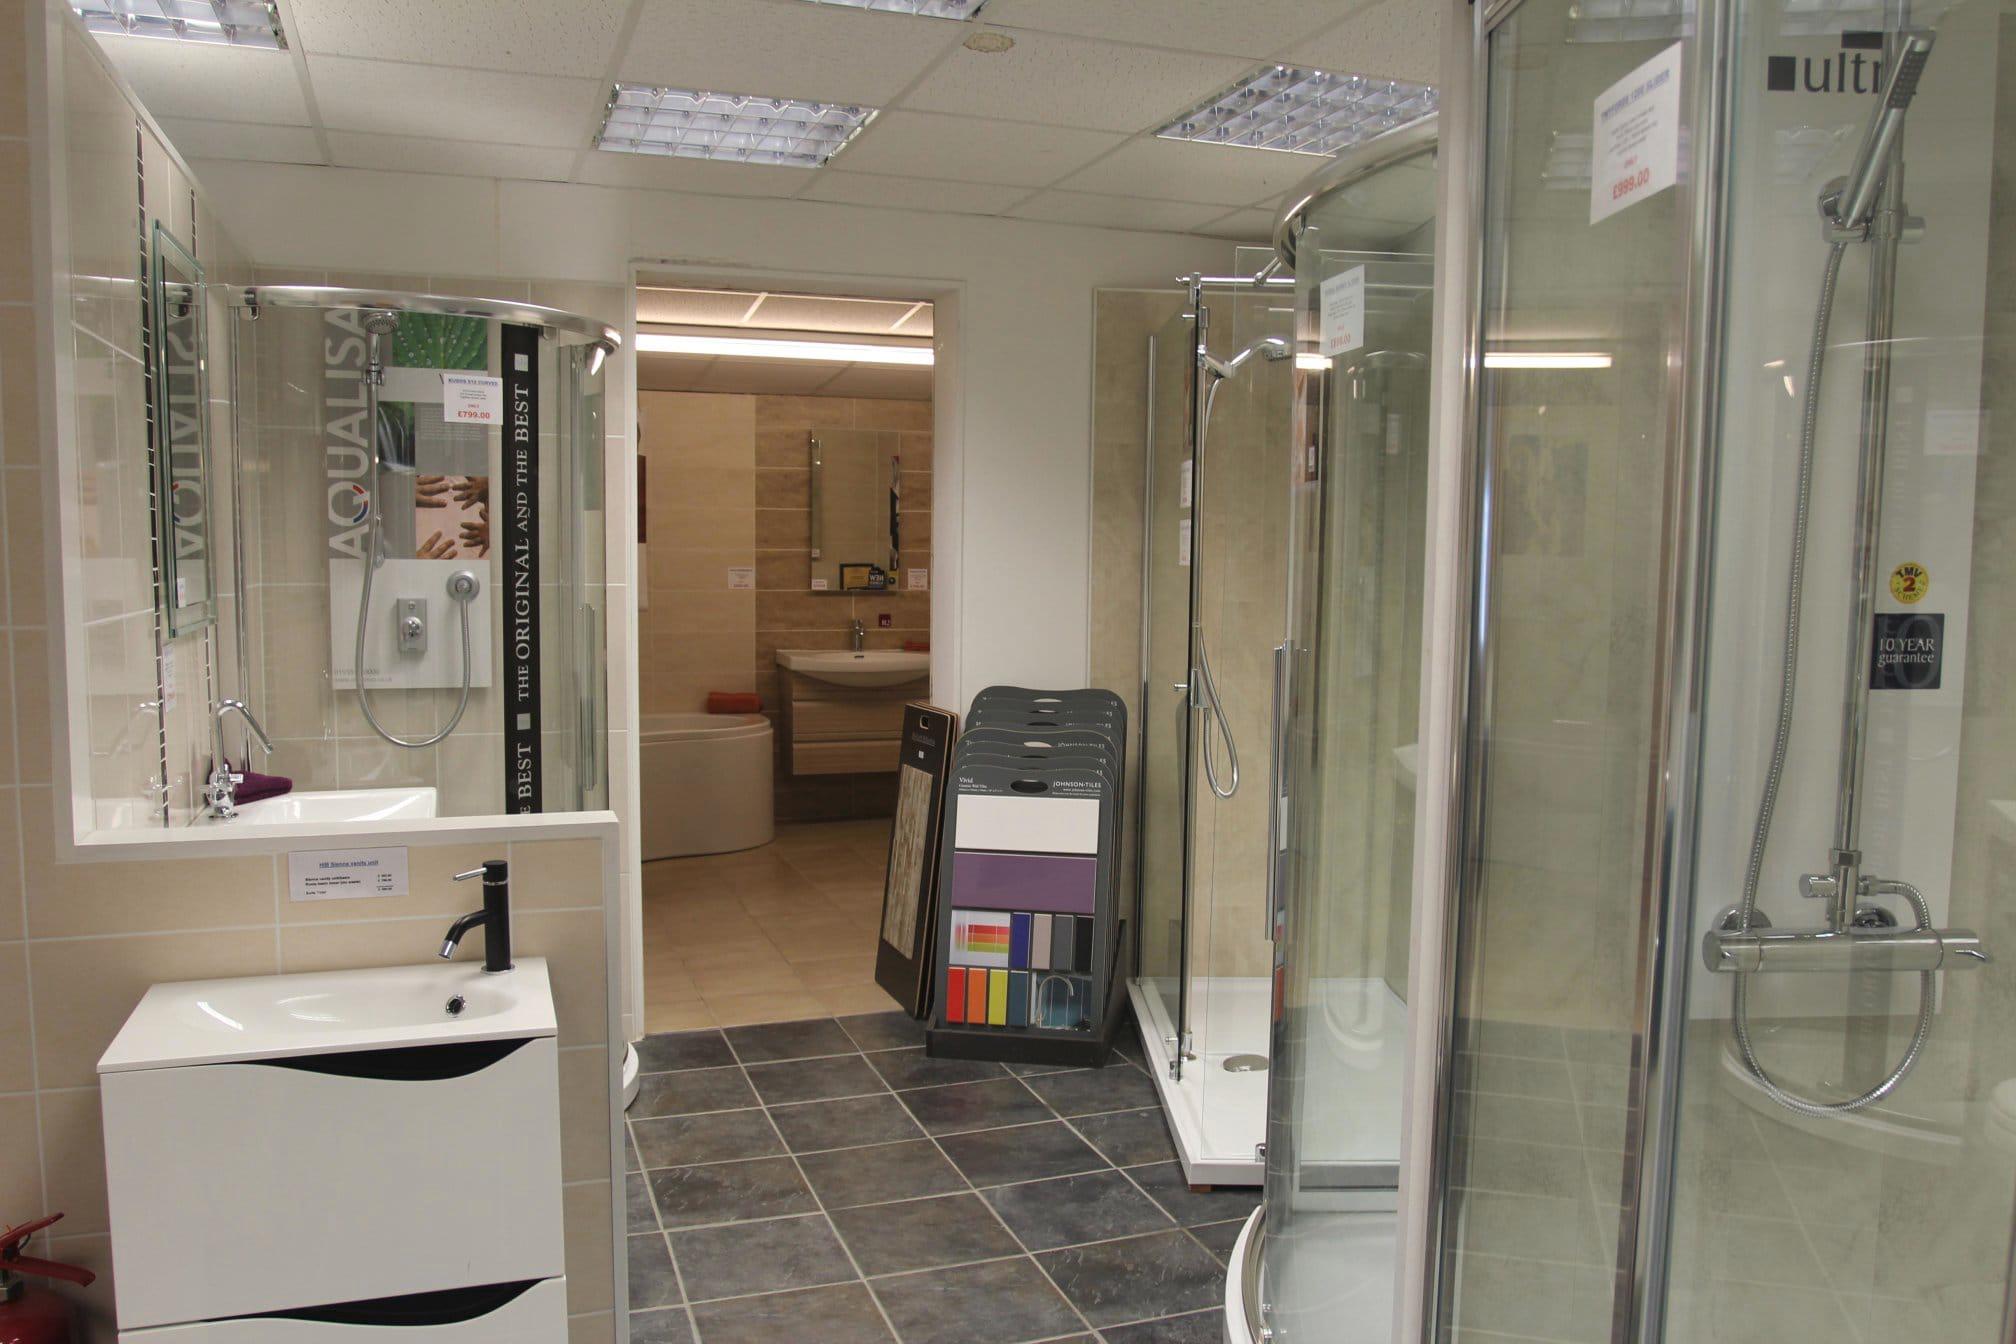 Bathrooms & Kitchens by Design Ltd Nuneaton 02476 325267